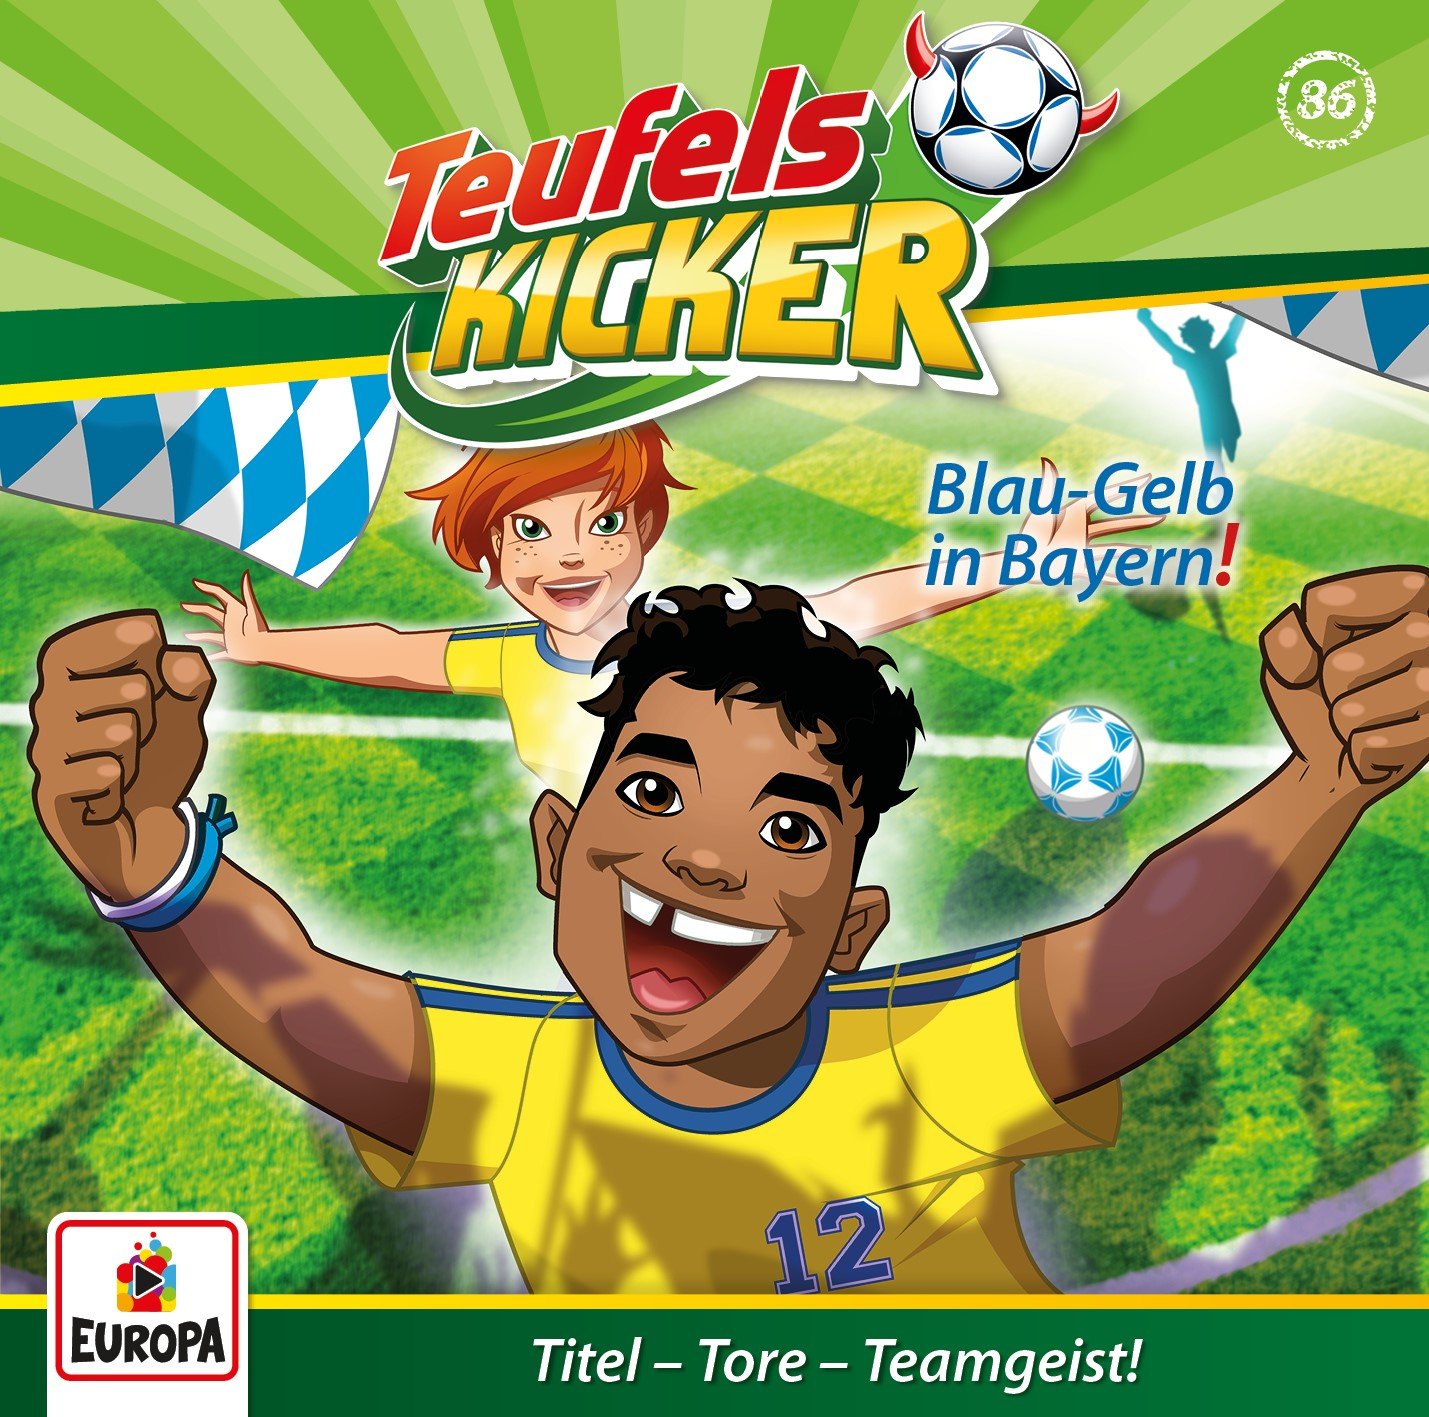 Teufelskicker : Blau-Gelb in Bayern!